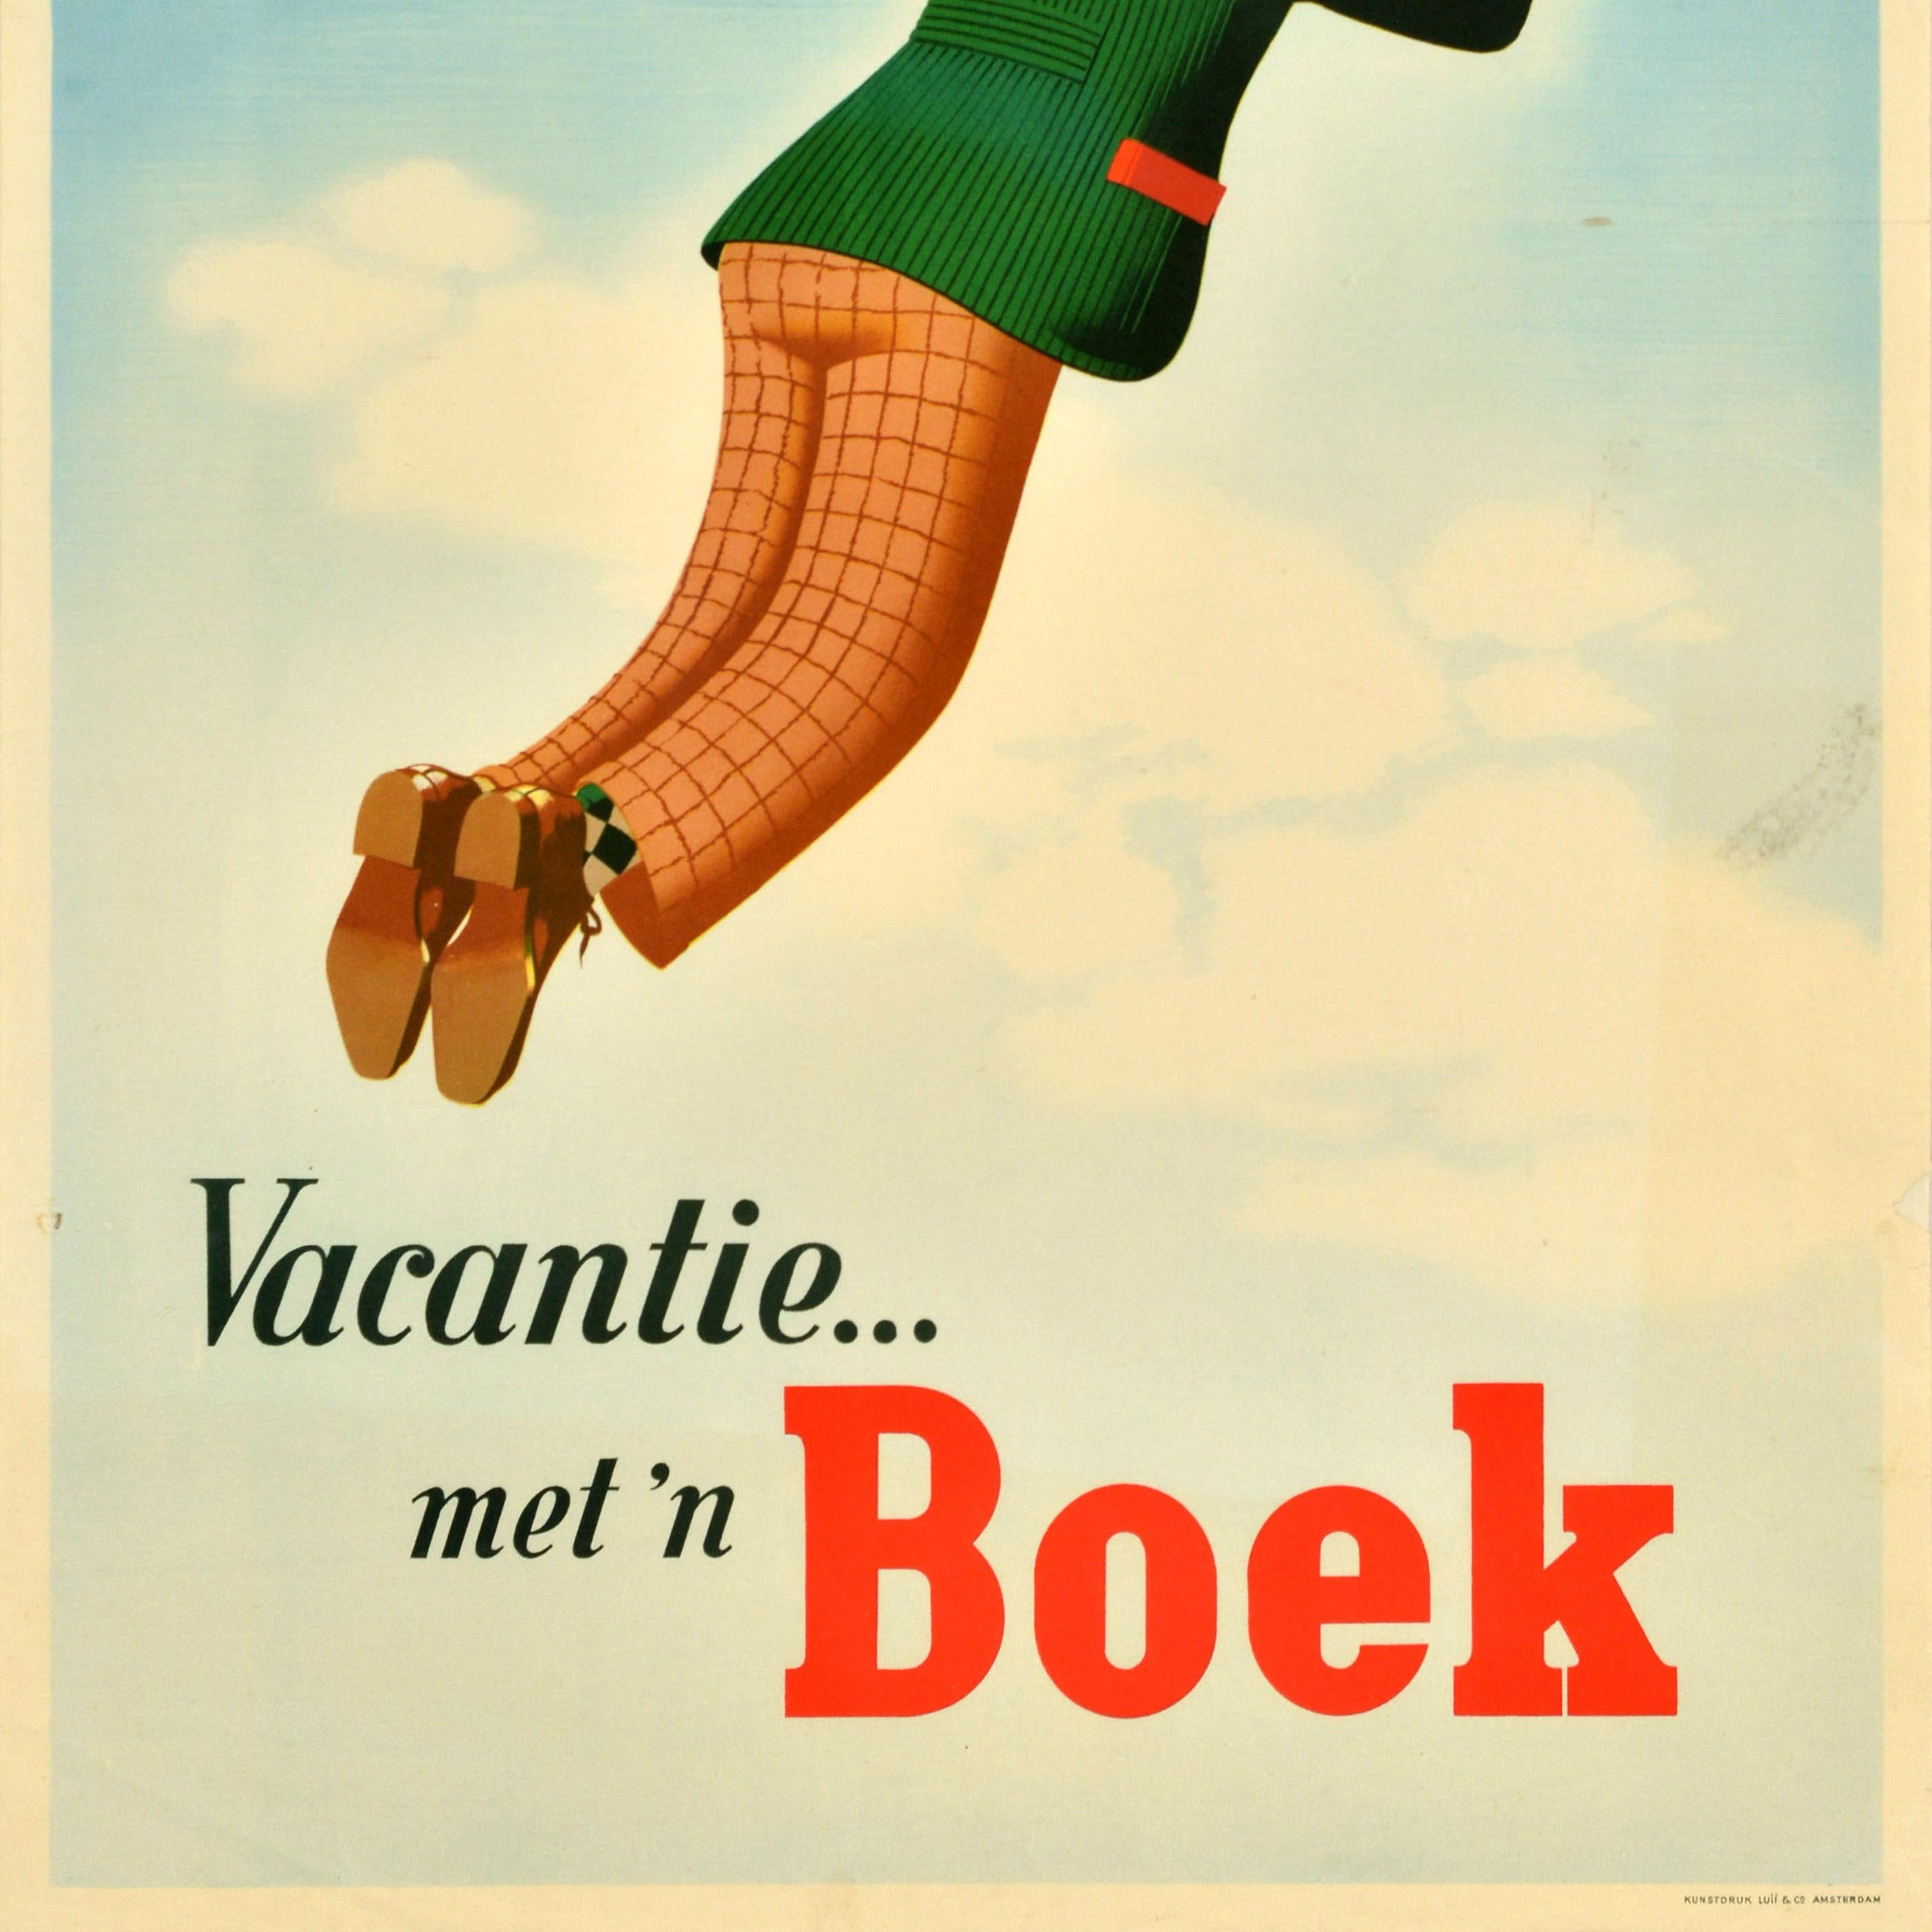 Original Vintage Advertising Poster Vacation Book Vacantie Boek Sky Jan Wijga In Good Condition For Sale In London, GB